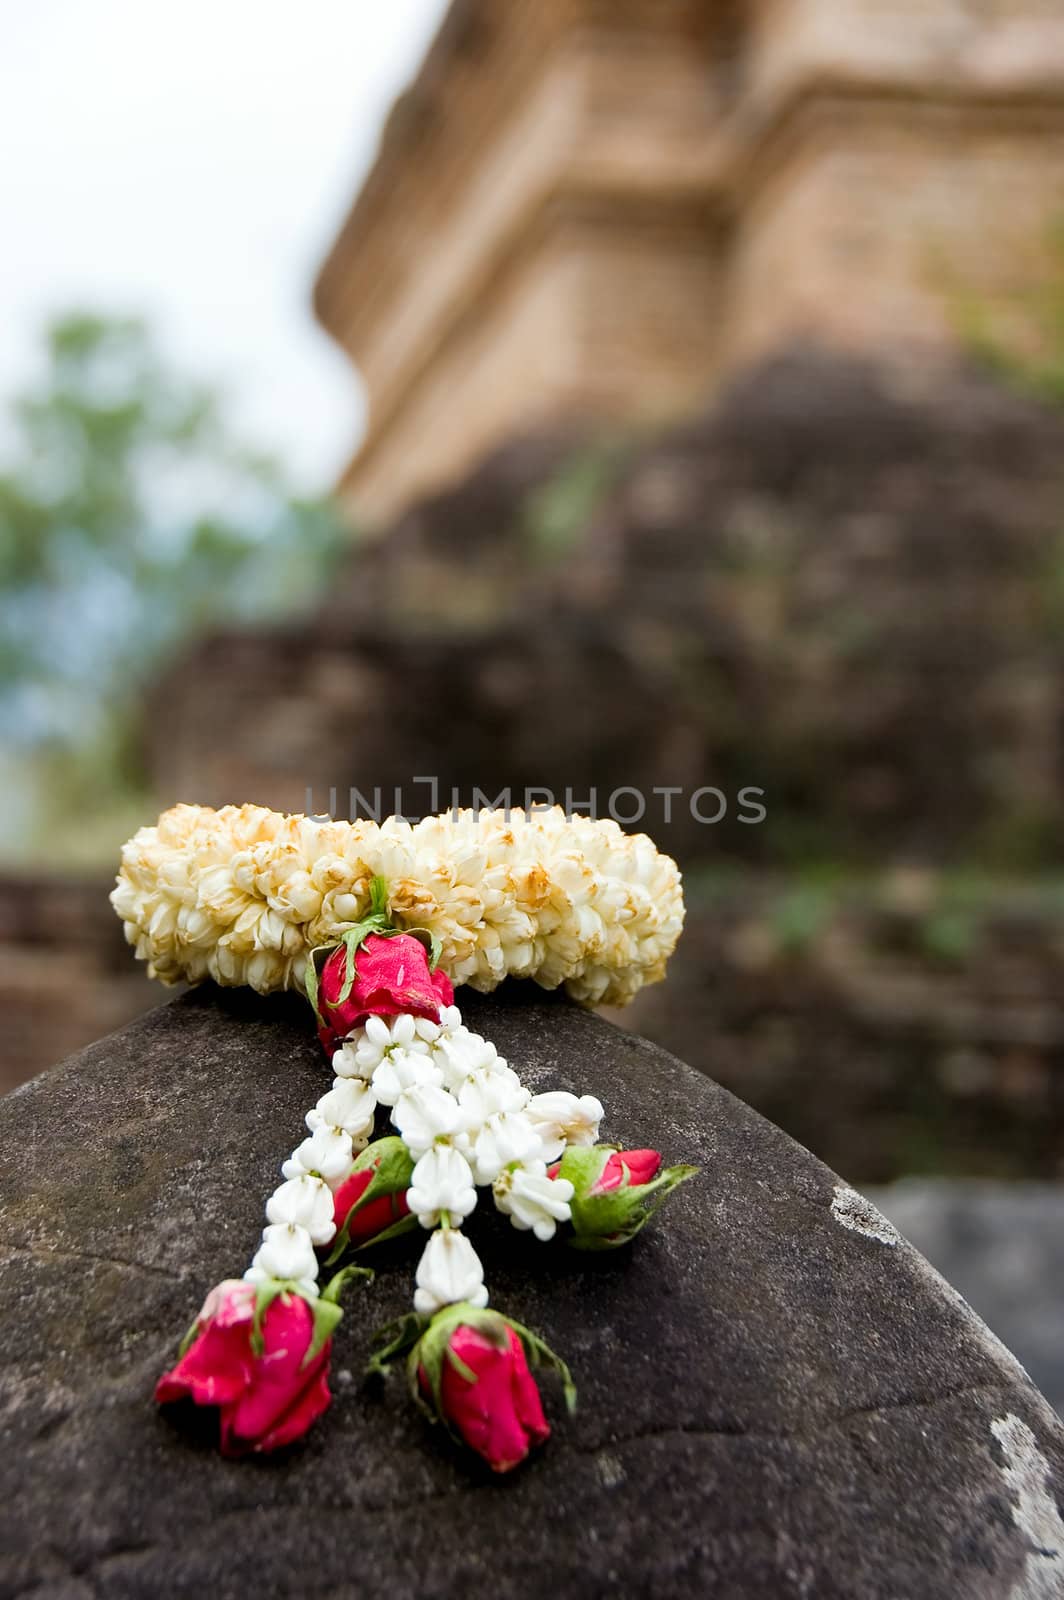 buddhist flower offerings